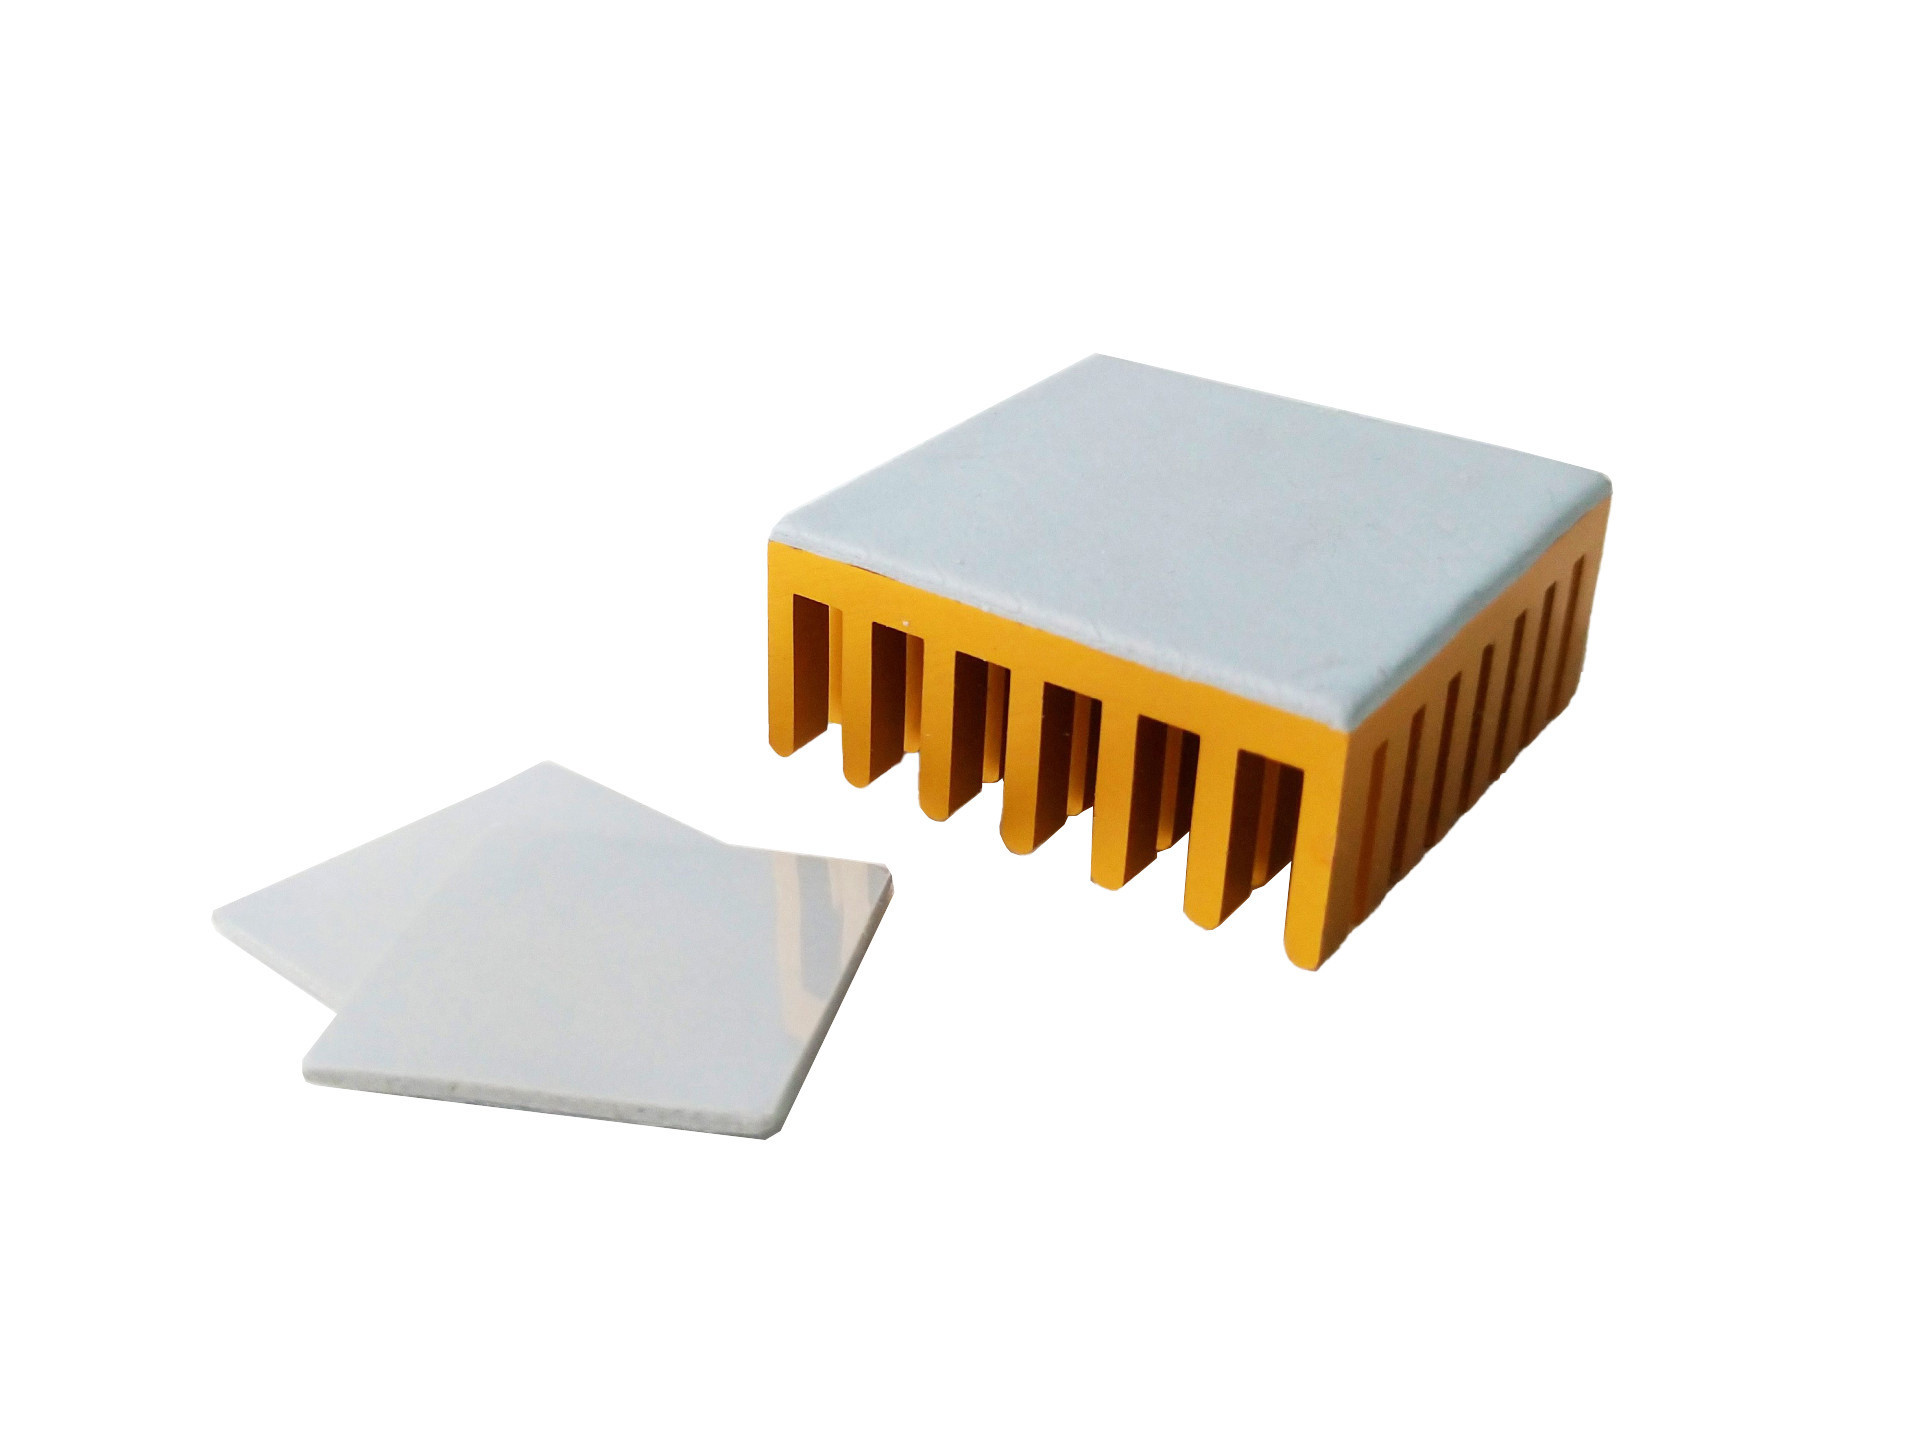 TG-A1780 Ultra Soft Thermal Pad